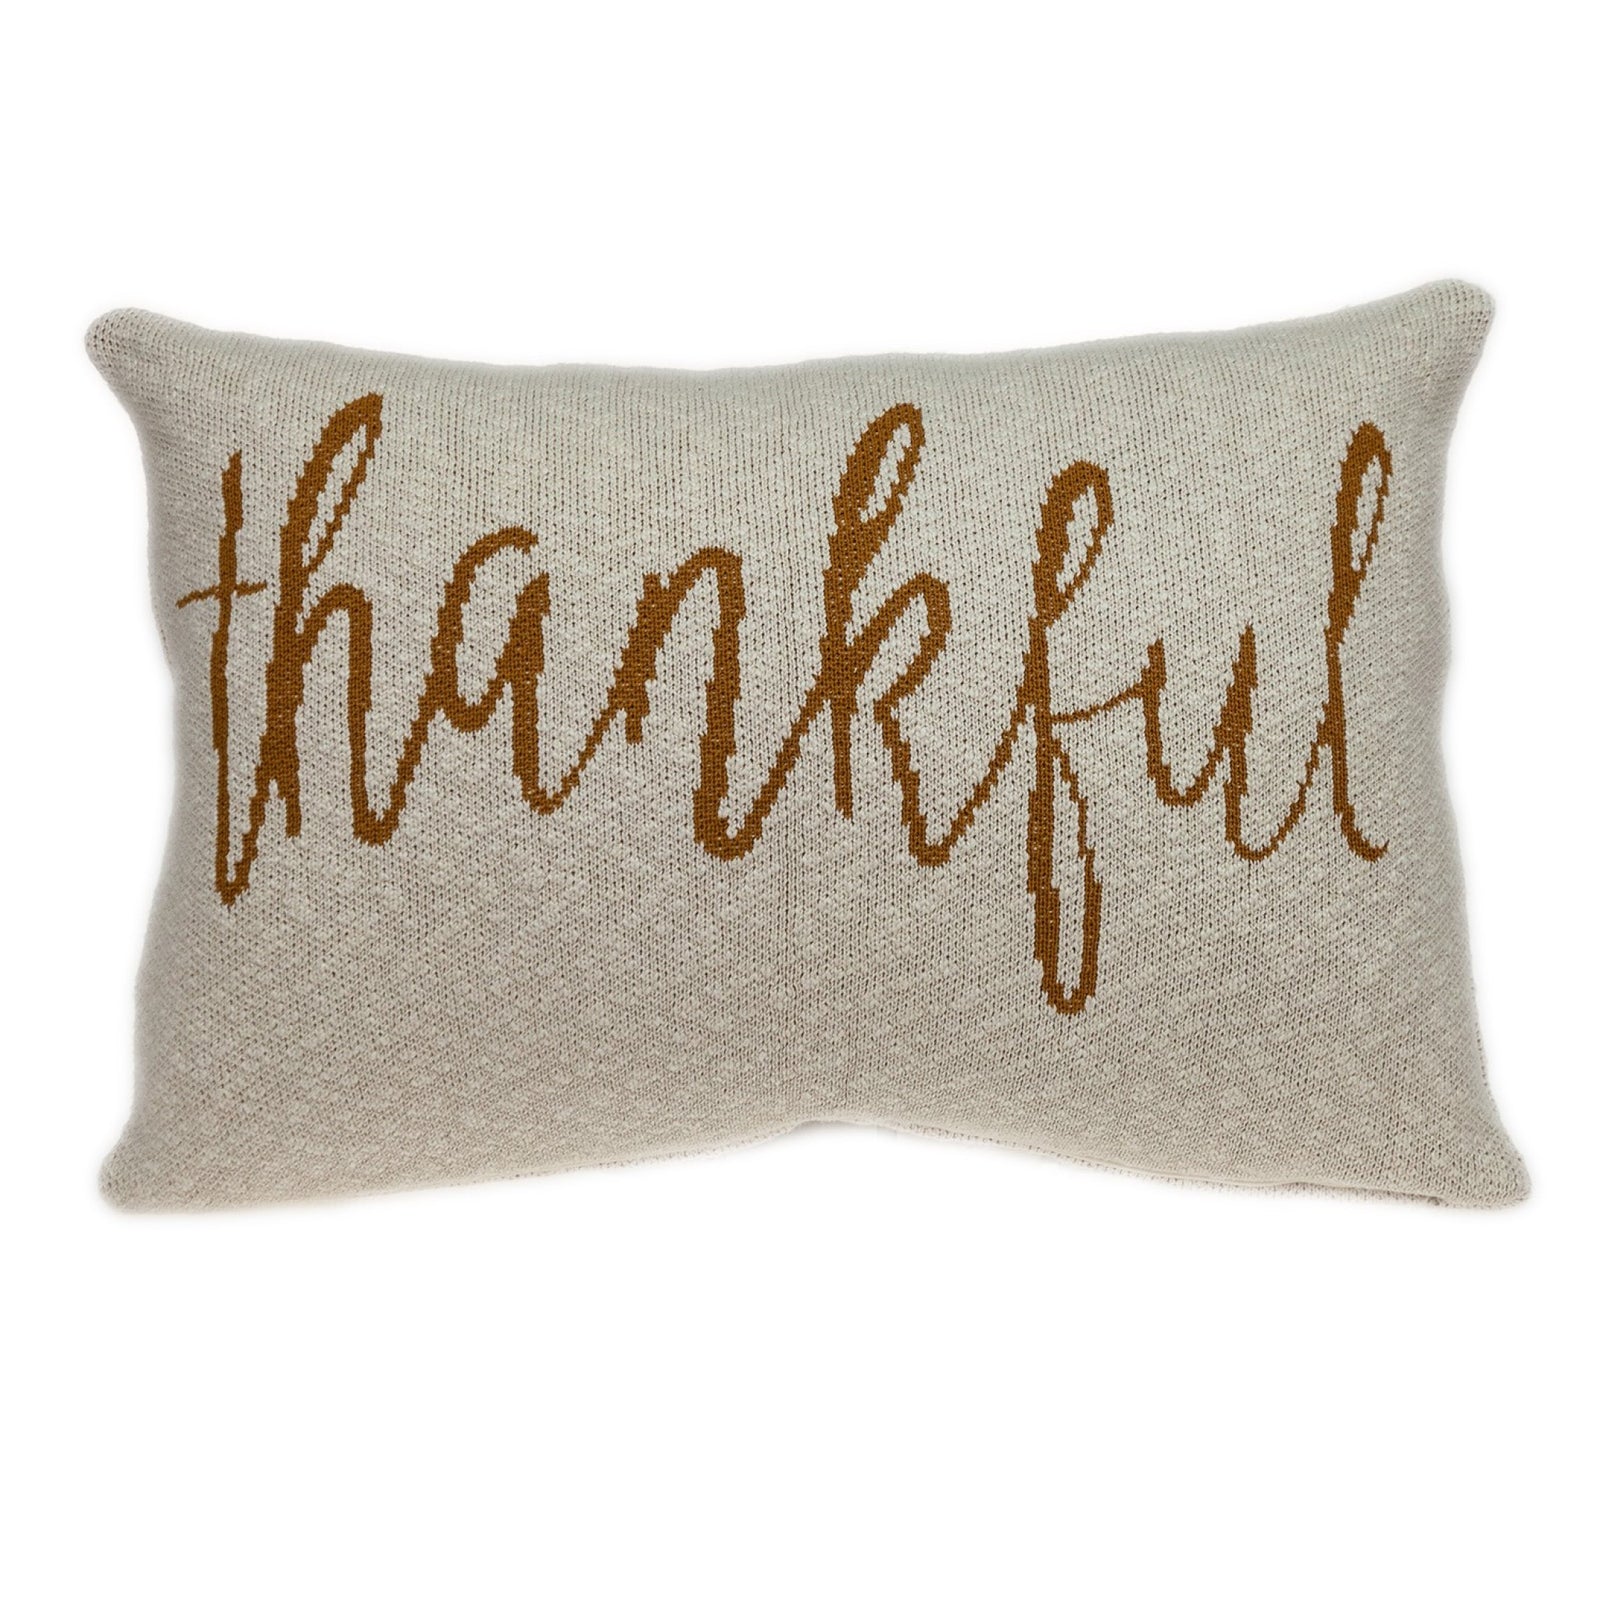 Thankful Decorative Pillow